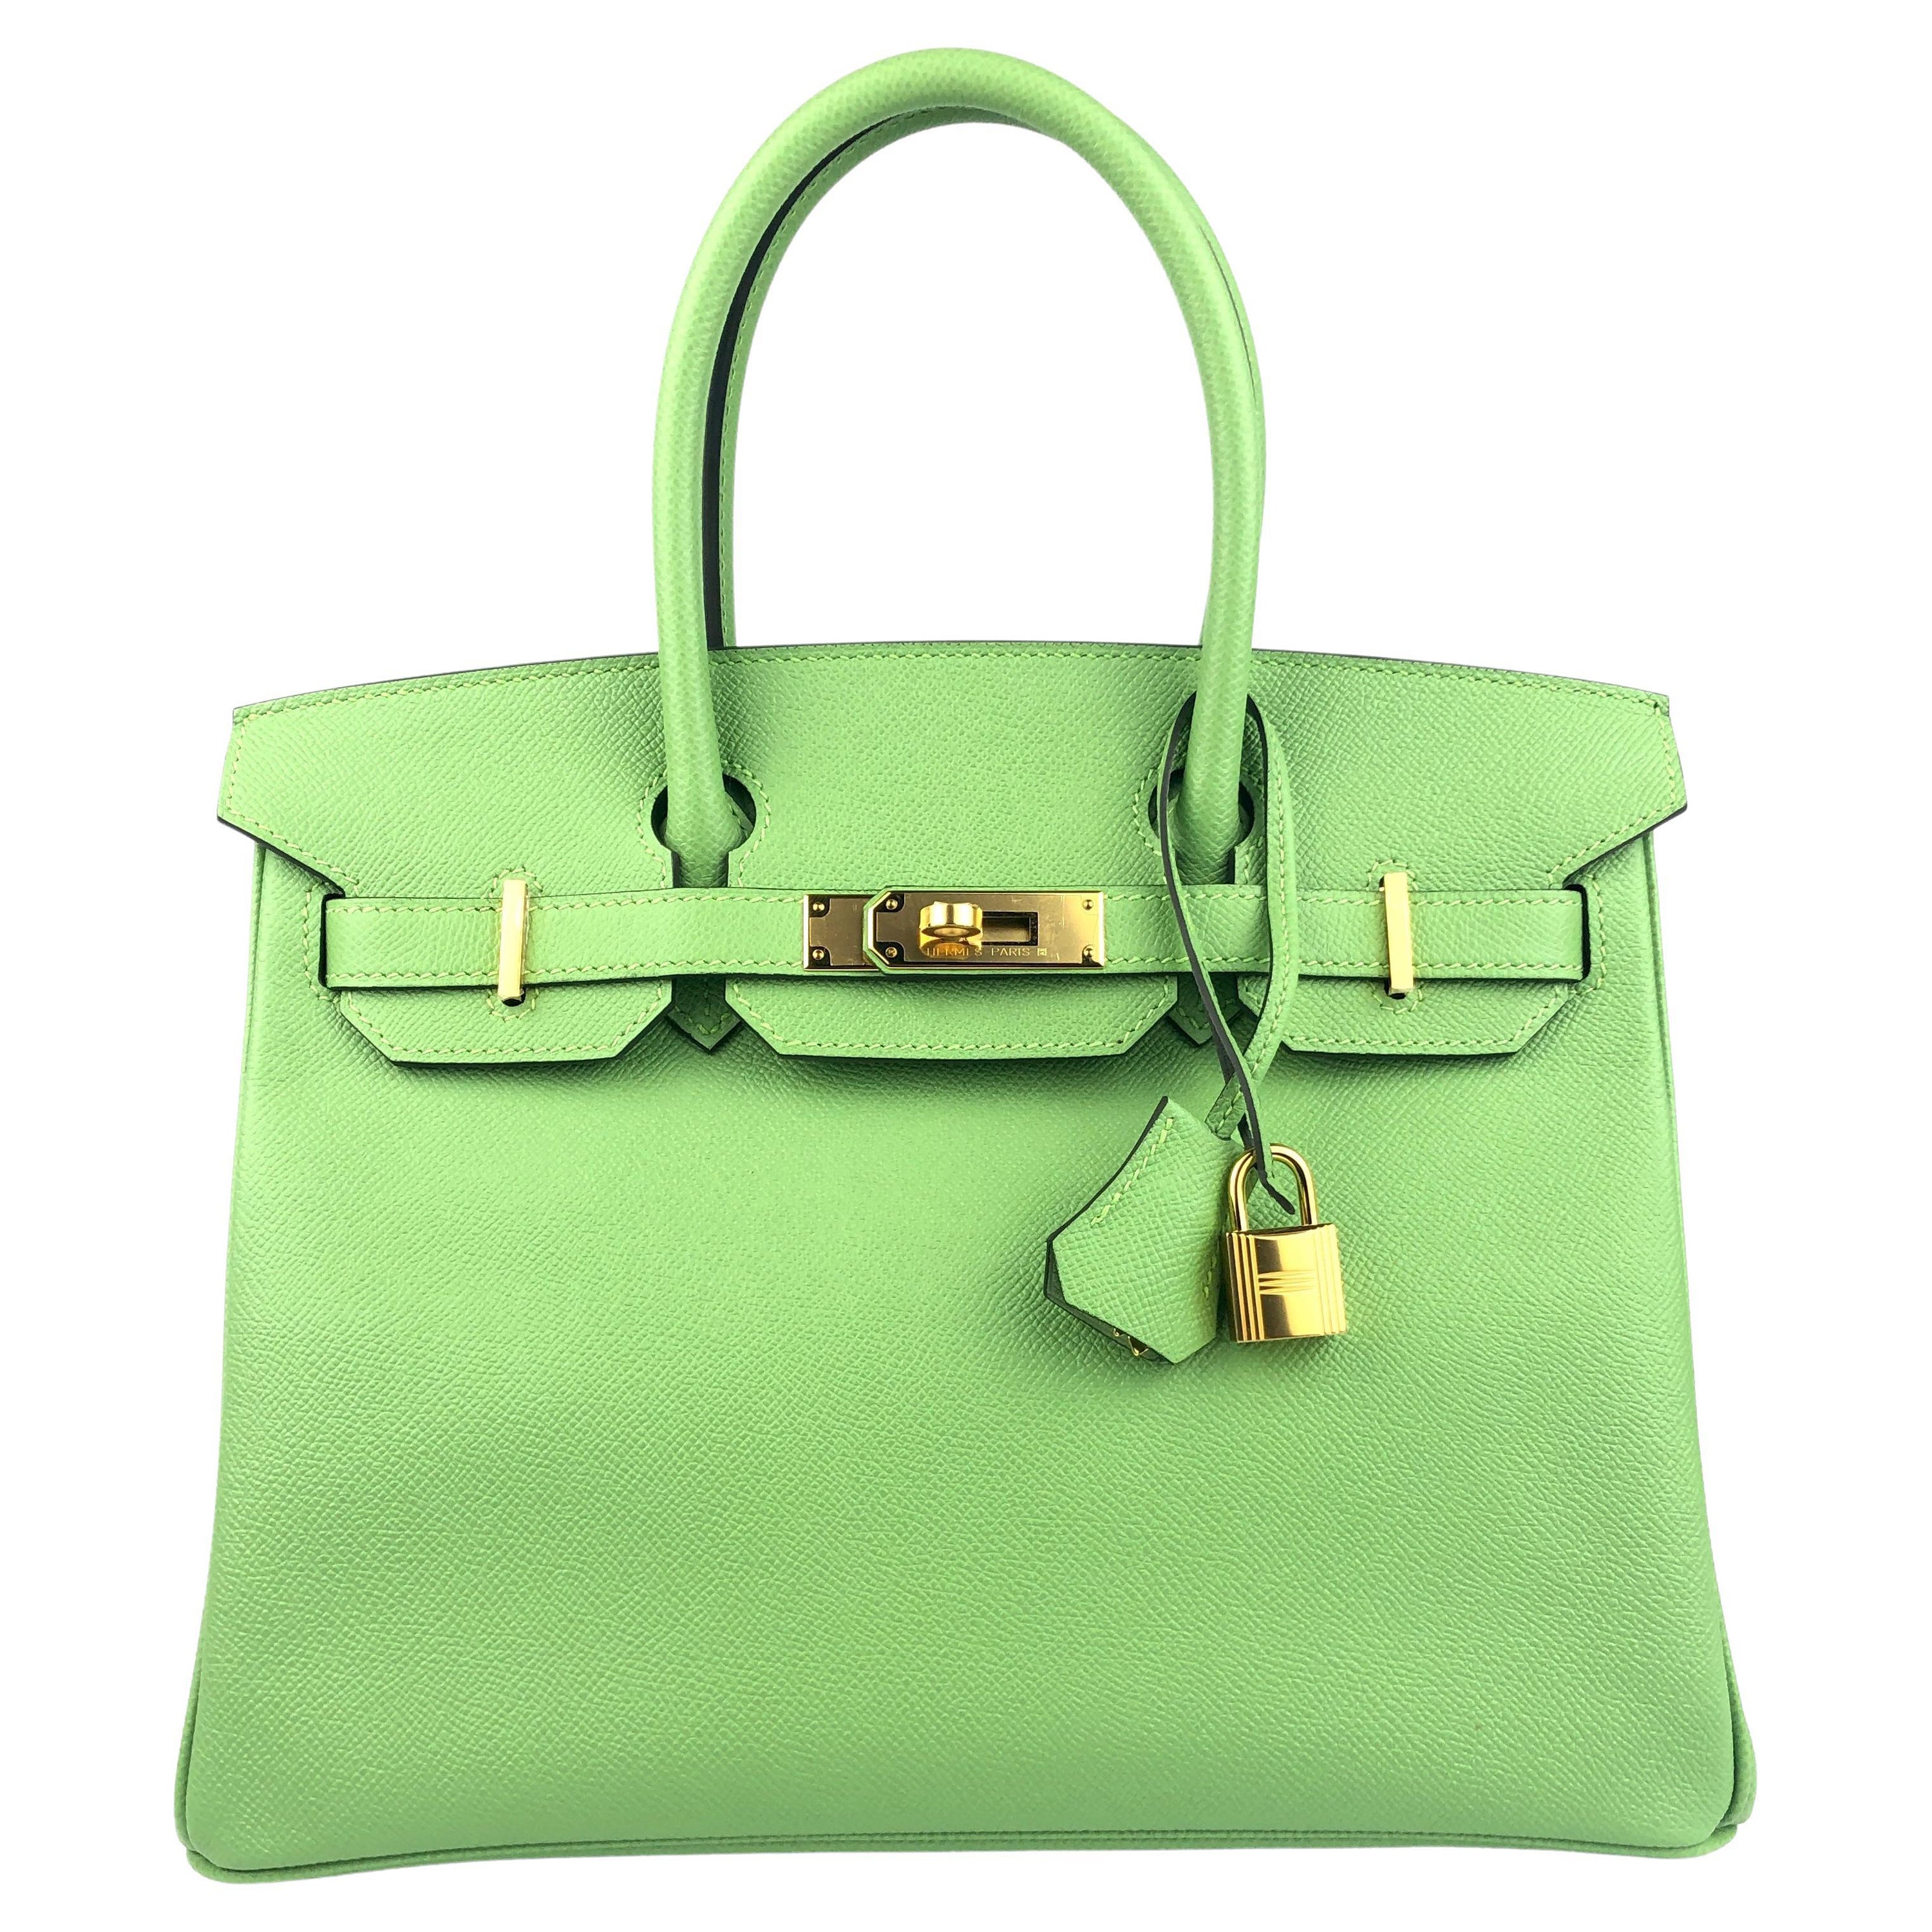 Hermes Birkin 30 Vert Criquet Green Epsom Leather Handbag Gold Hardware 2020